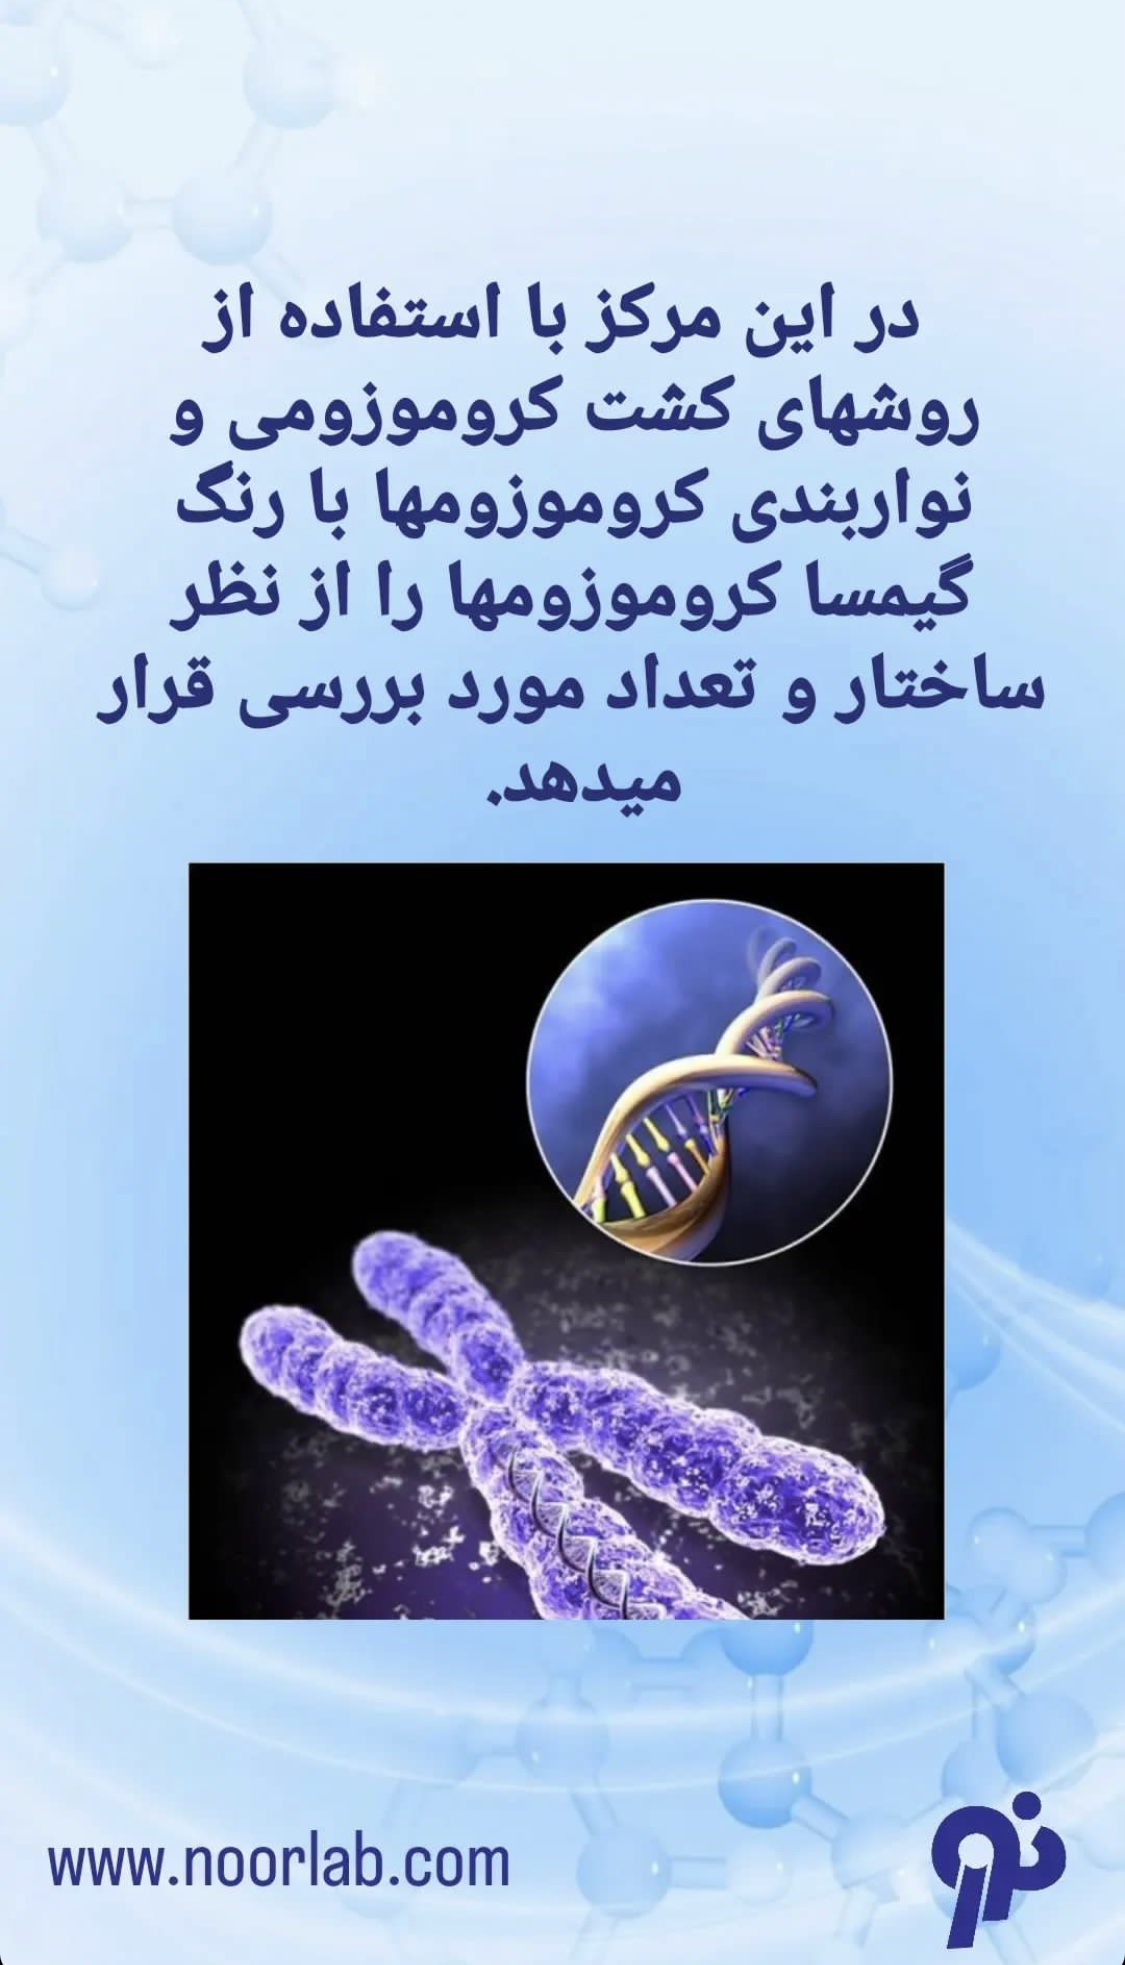 کروموزوم و DNA